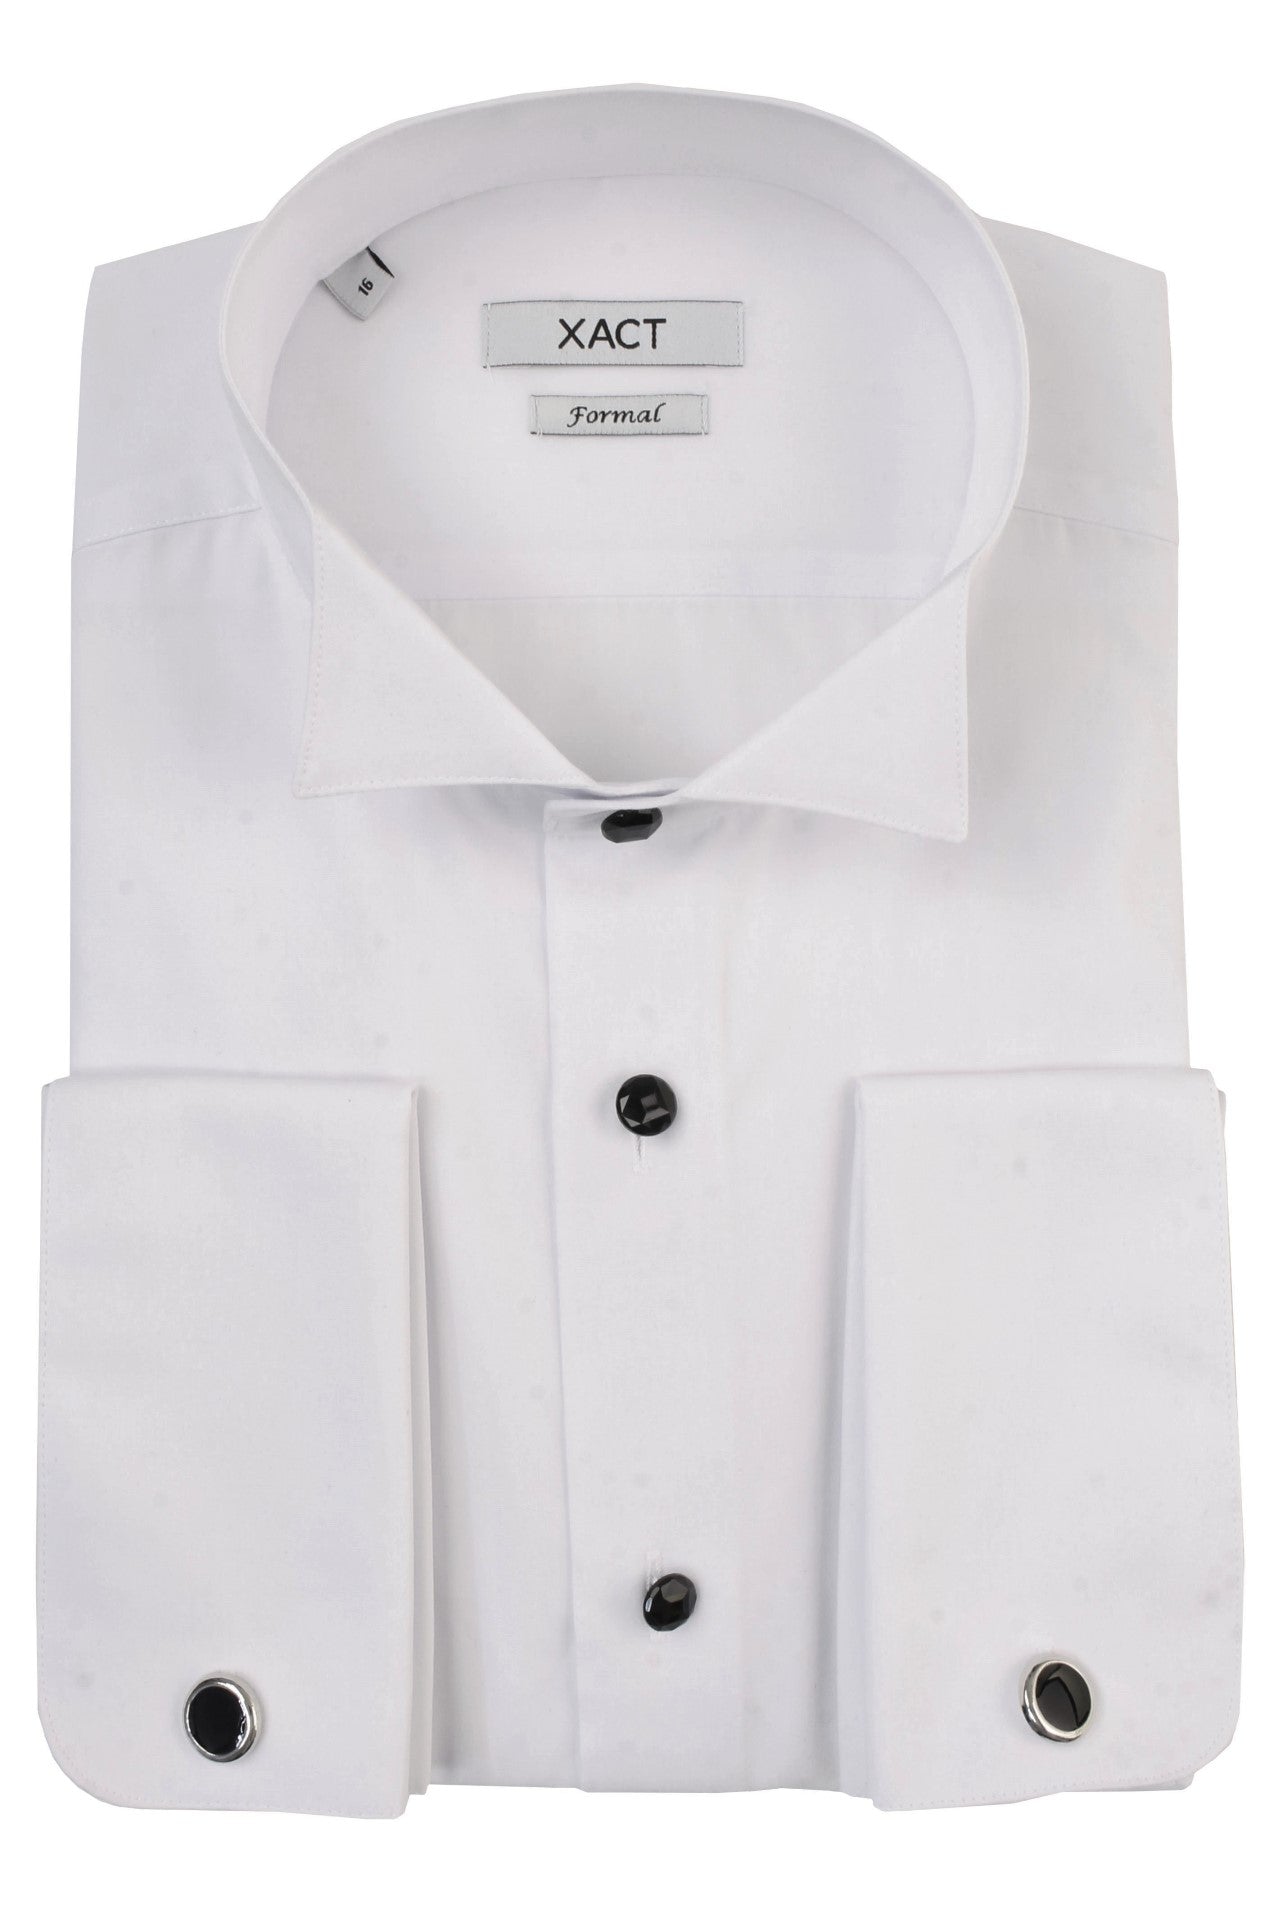 Xact Men's Formal Tuxedo/ Dress Shirt with Double Cuff and Cuff Links-Main Image